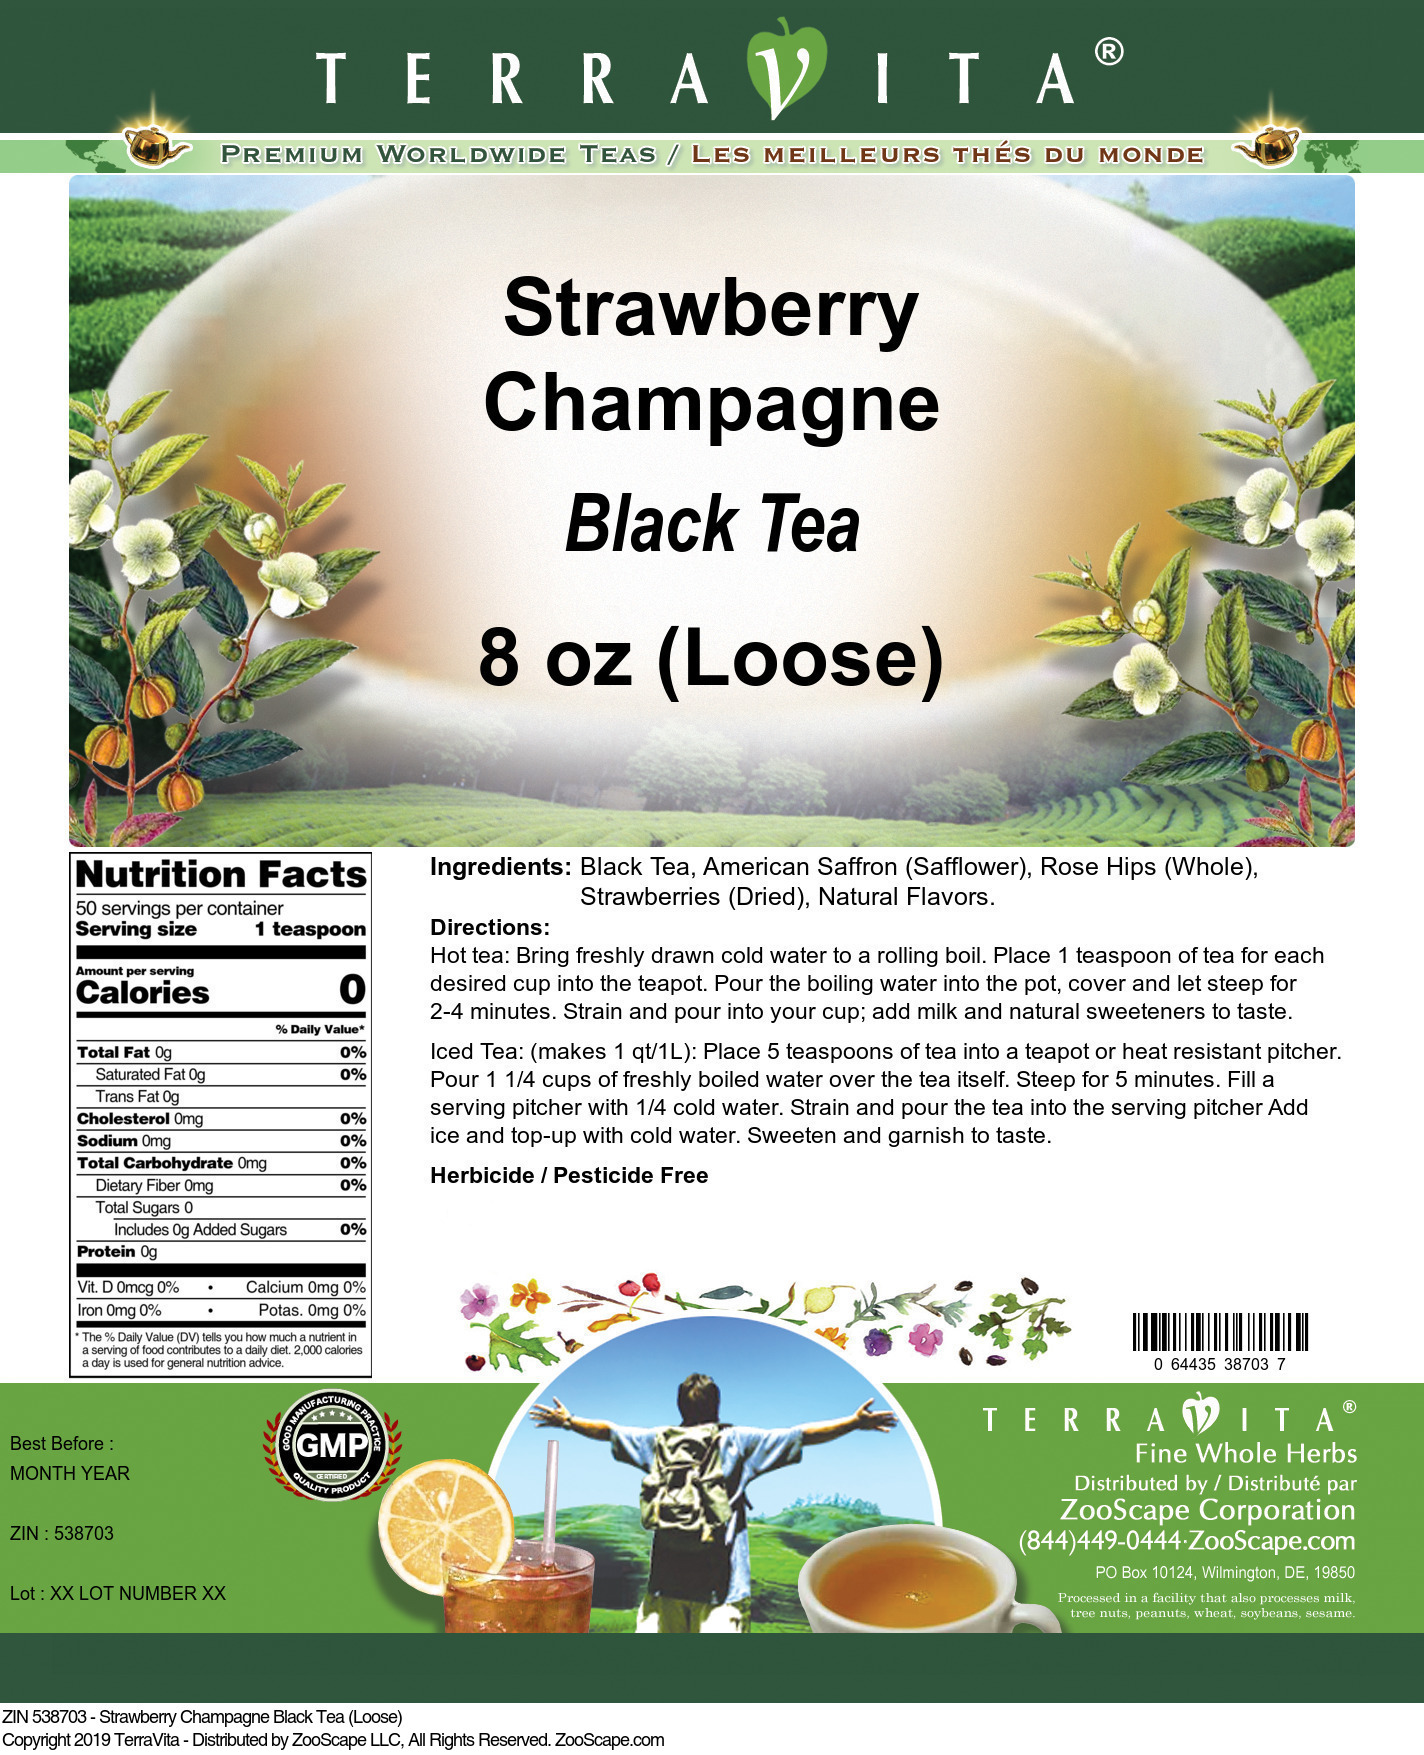 Strawberry Champagne Black Tea (Loose) - Label